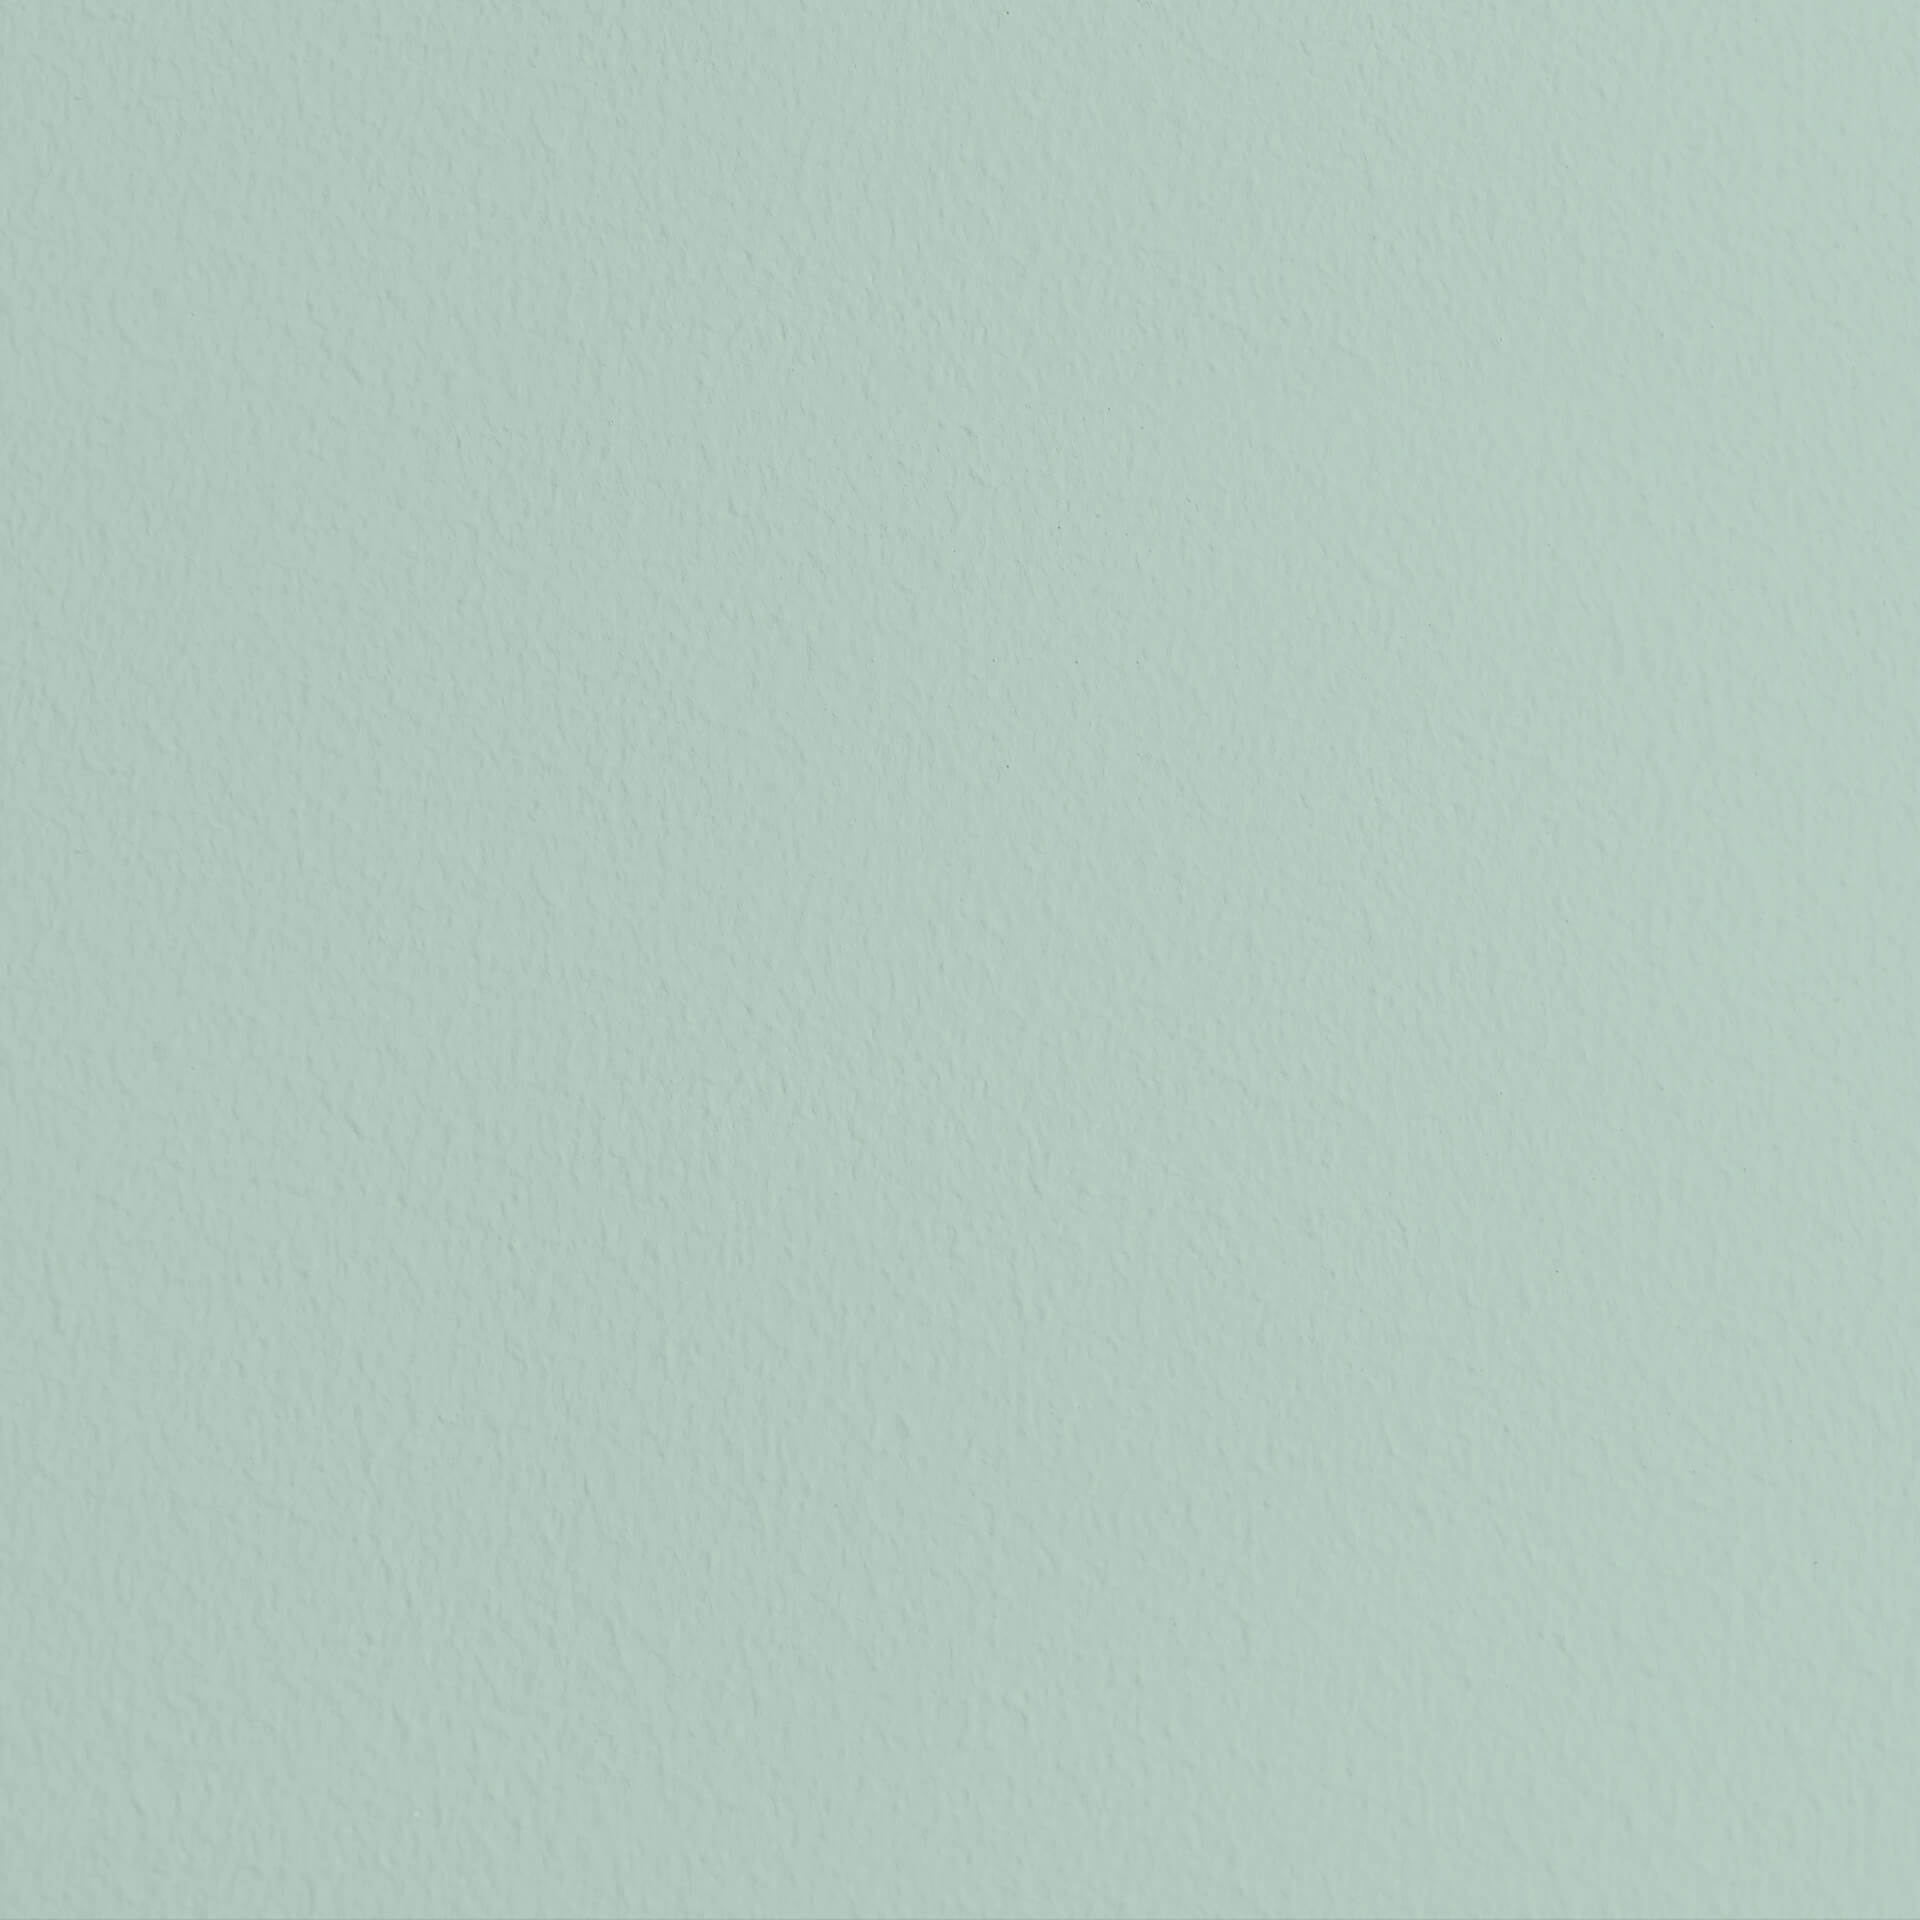 Mylands Copper Green No. 36 - Marble Matt Emulsion / Wandfarbe, 5L